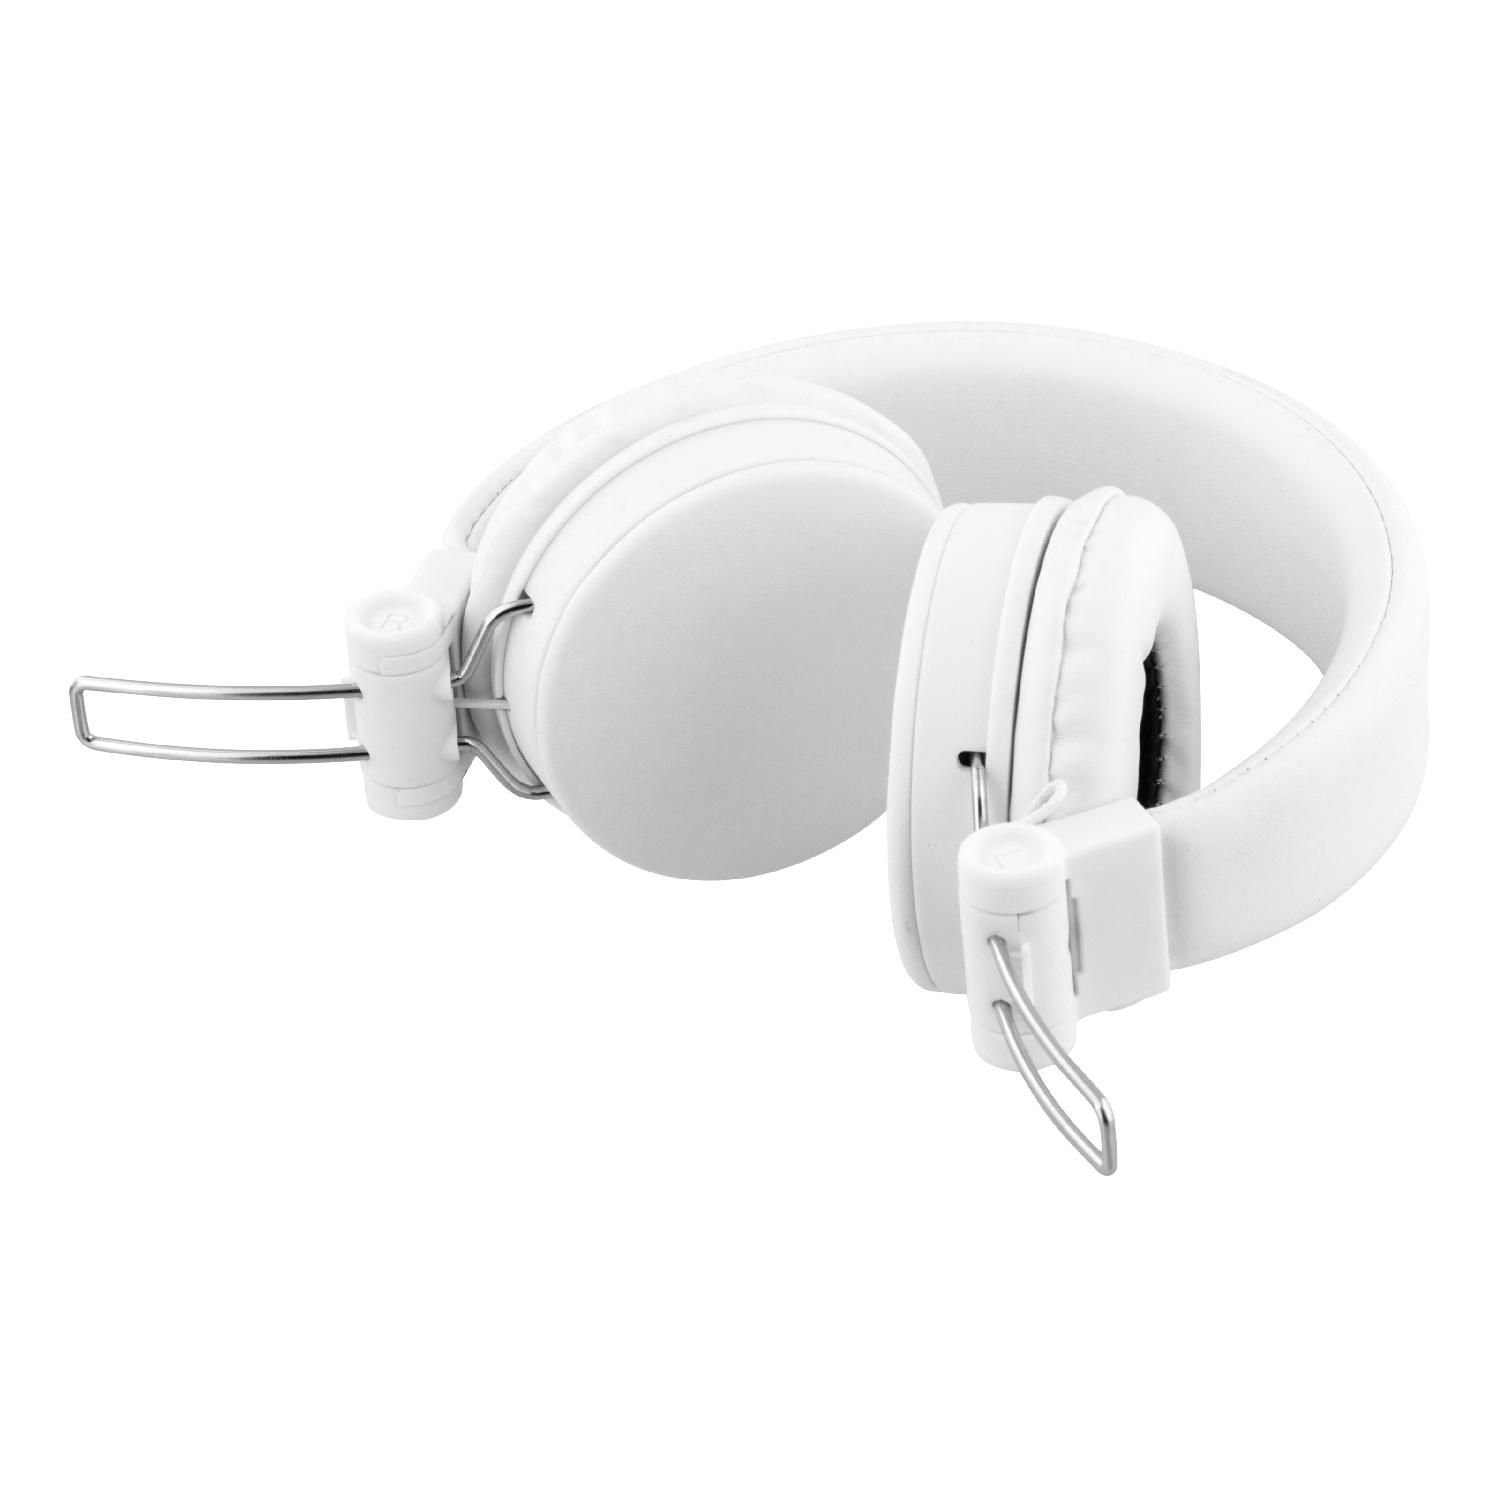 1,2m Klinkenanschluss 5 faltbares Herstellergarantie) STREETZ Kopfhörer weiß Headset, inkl. 3.5mm Kabel On-Ear-Kopfhörer Mikrofon, (integriertes Ohrpolster Jahre